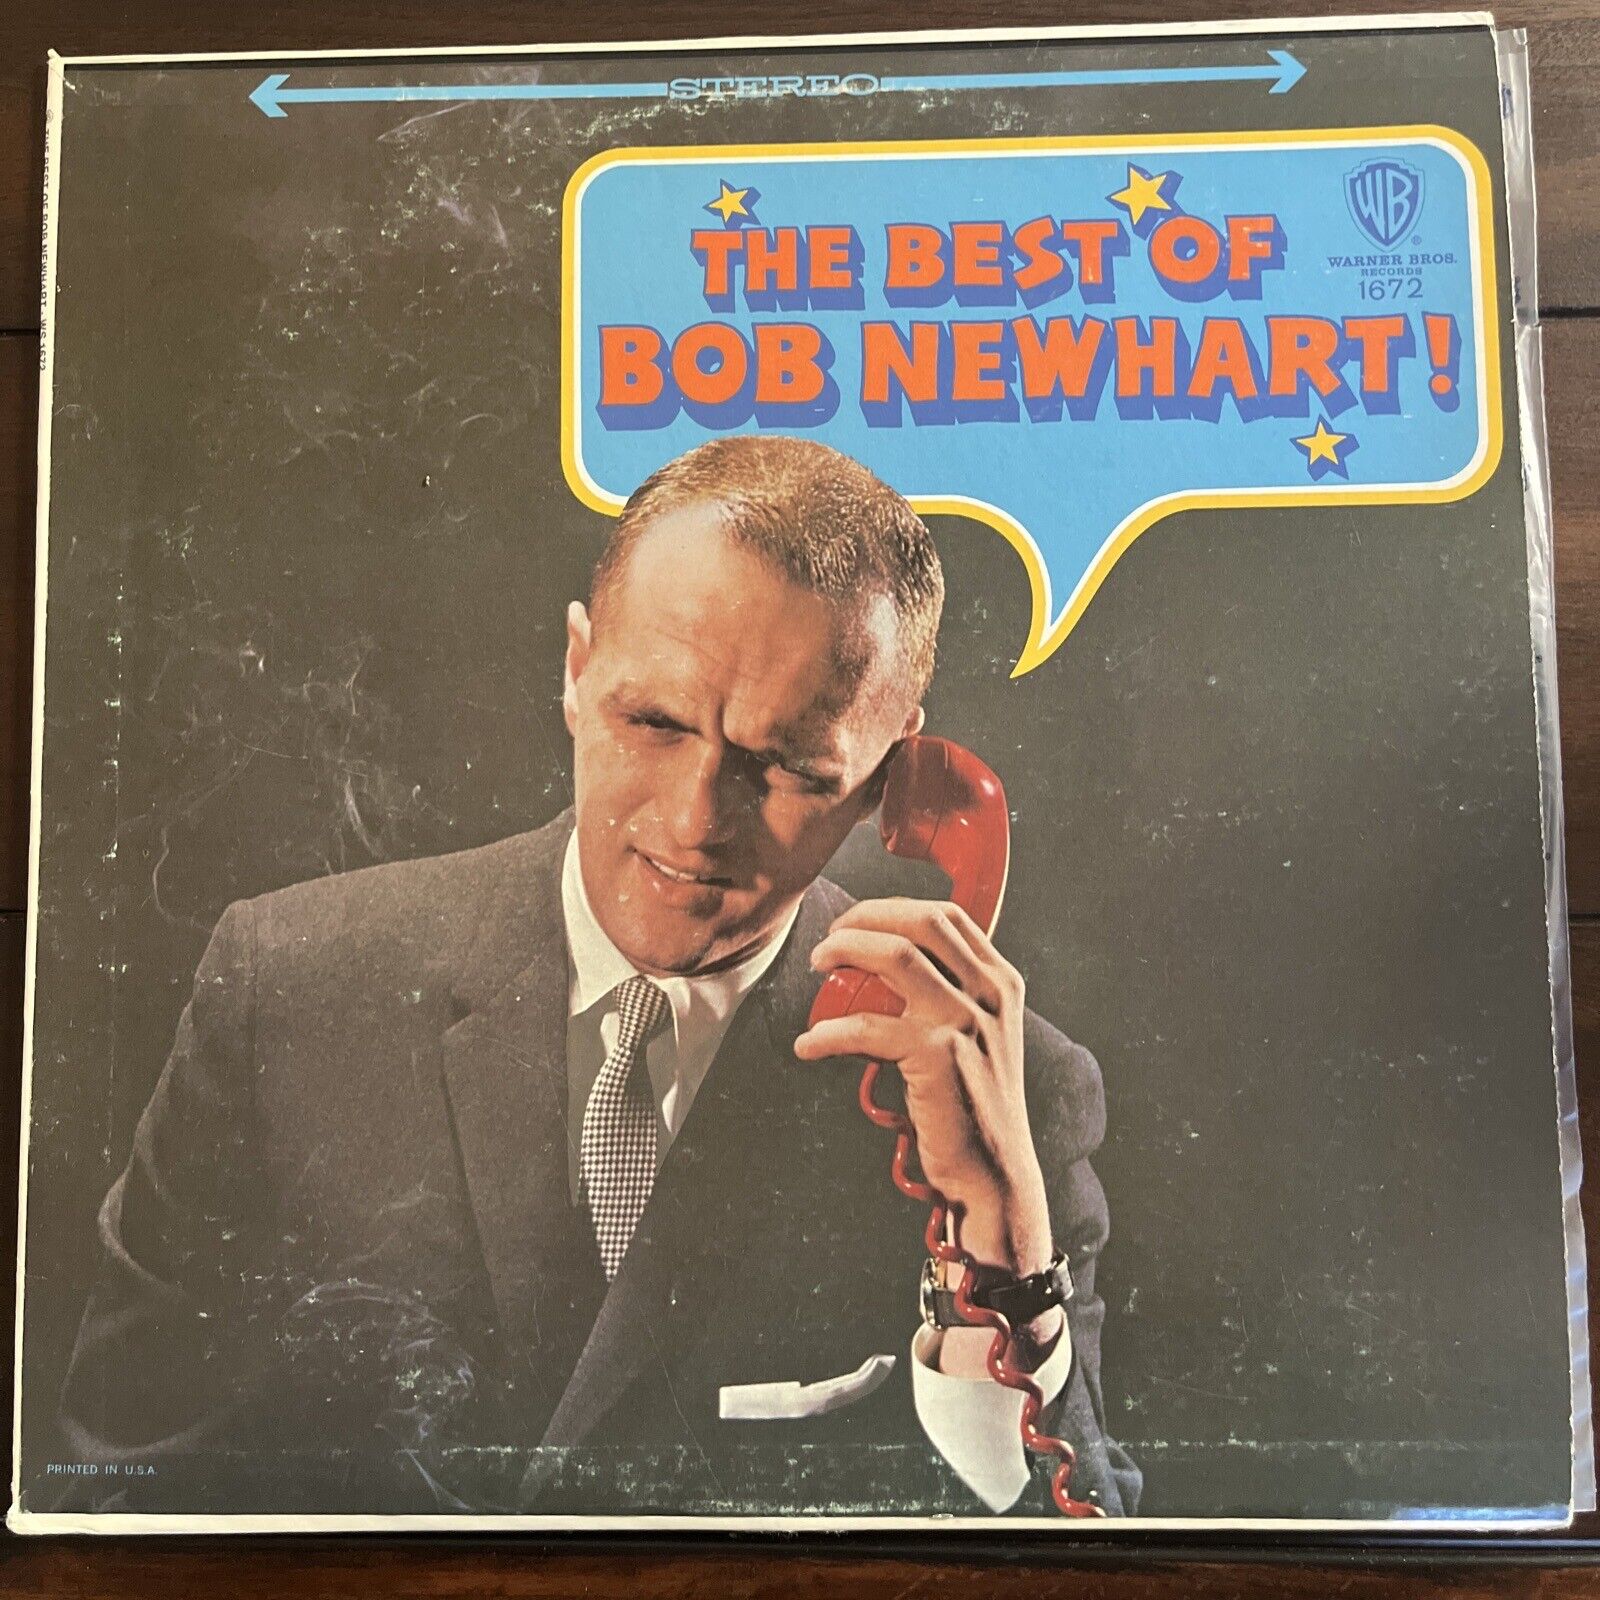 "The Best of Bob Newhart" - Warner Brothers LP, Comedy, Spoken Word, 1966